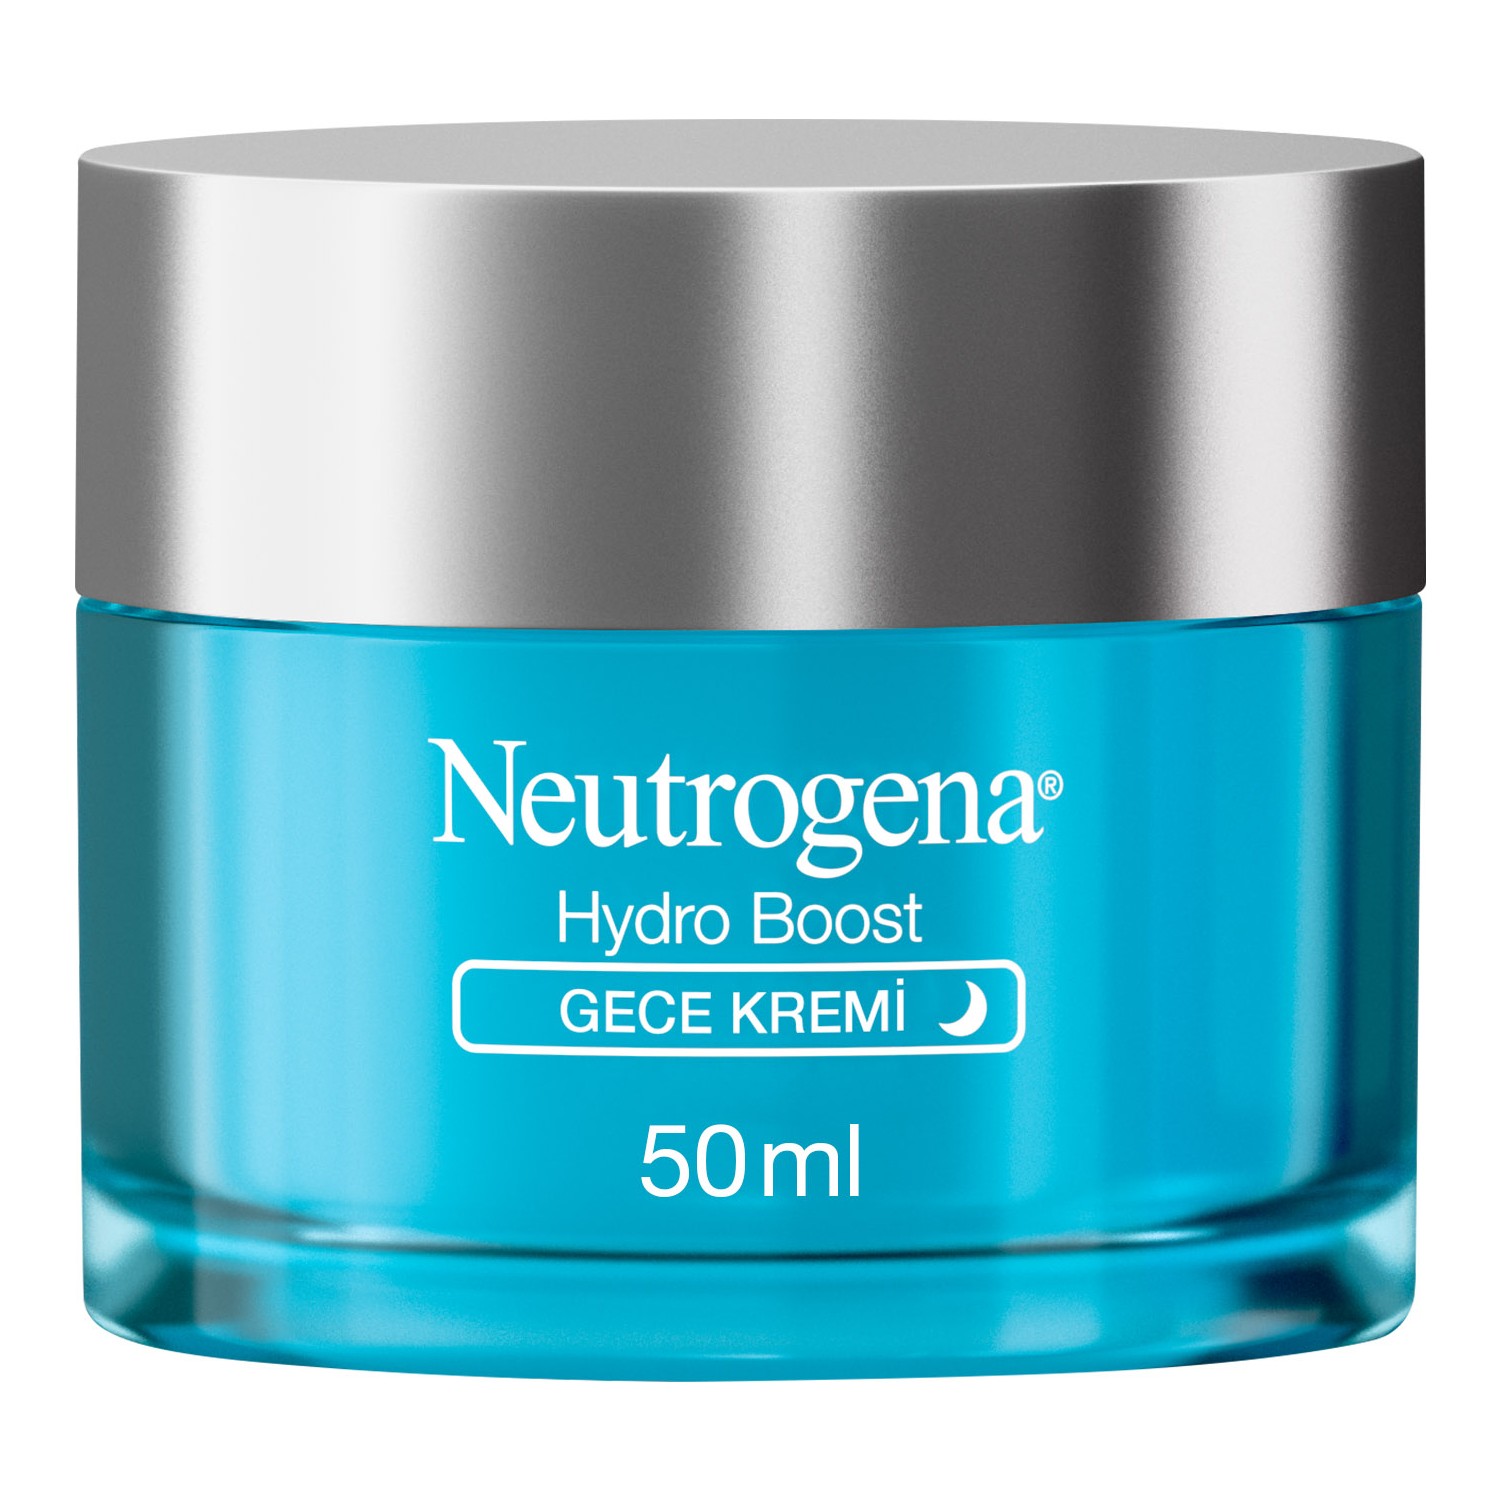 Ночной крем Neutrogena Hydro Boost, 50 мл крем для лица ночной уход skindrop elastin hydro 50 мл 25